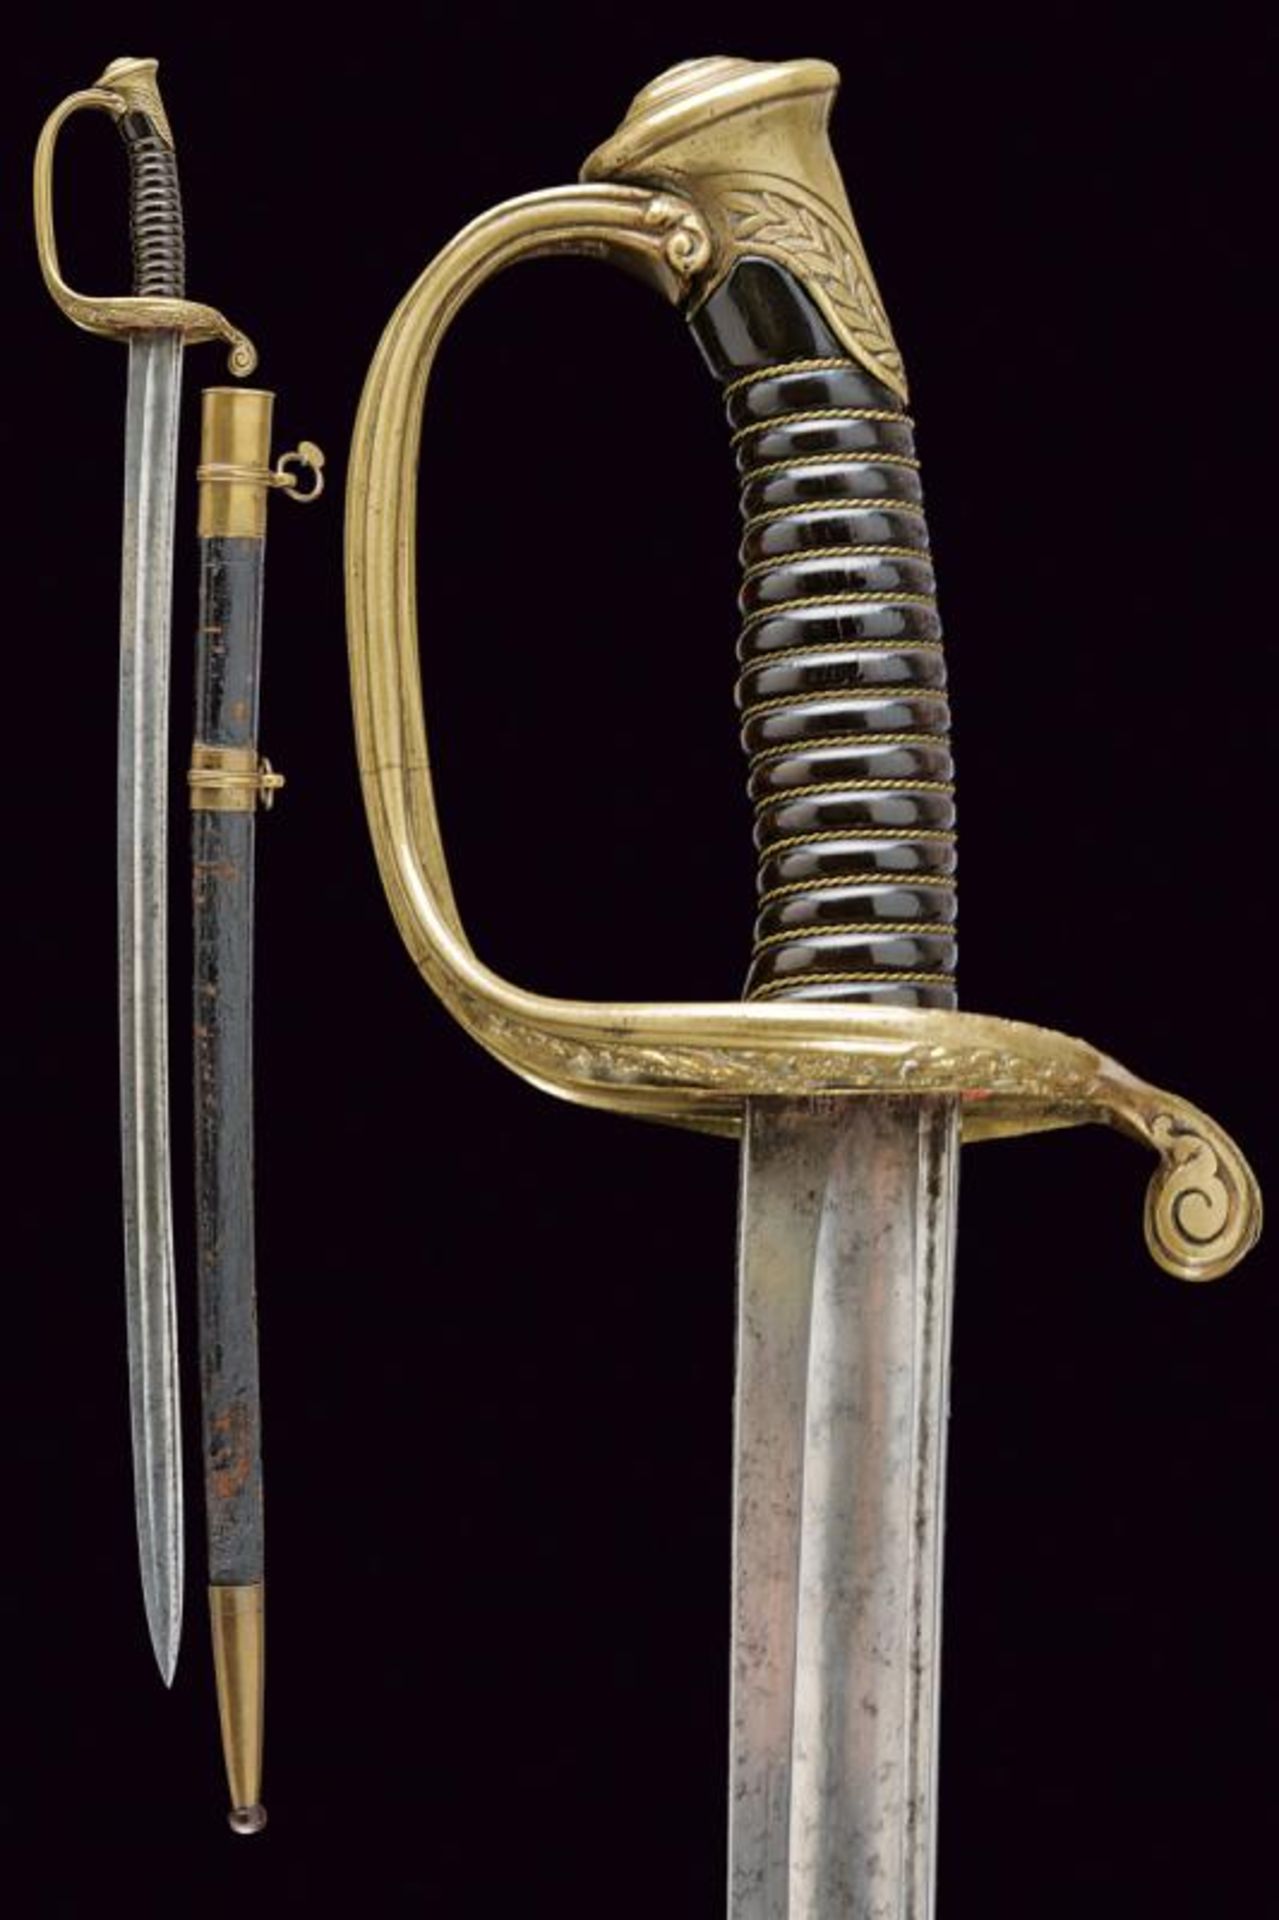 An 1845 model officer's sabre